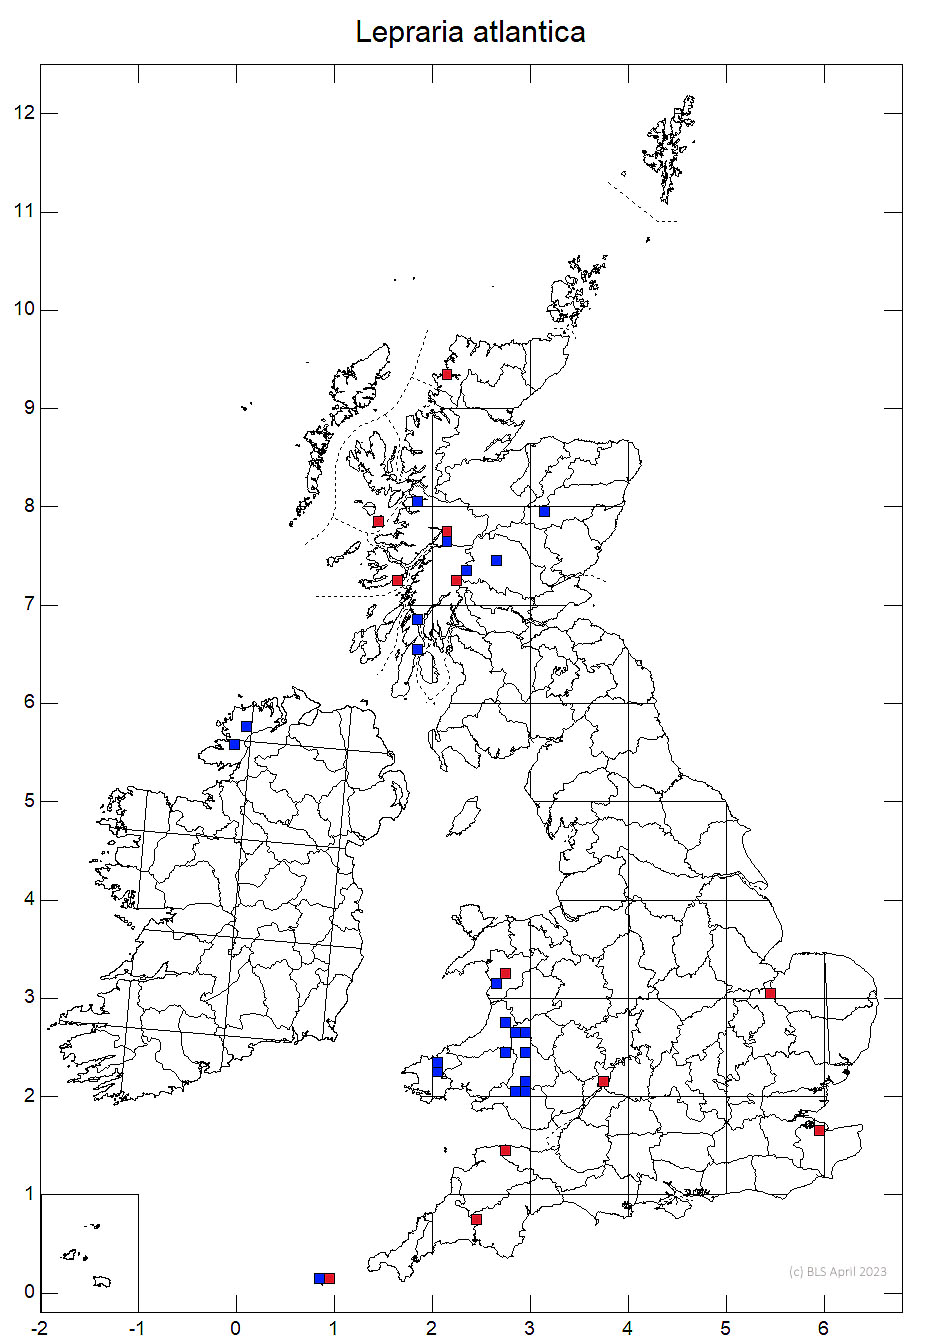 Lepraria atlantica 10km sq distribution map